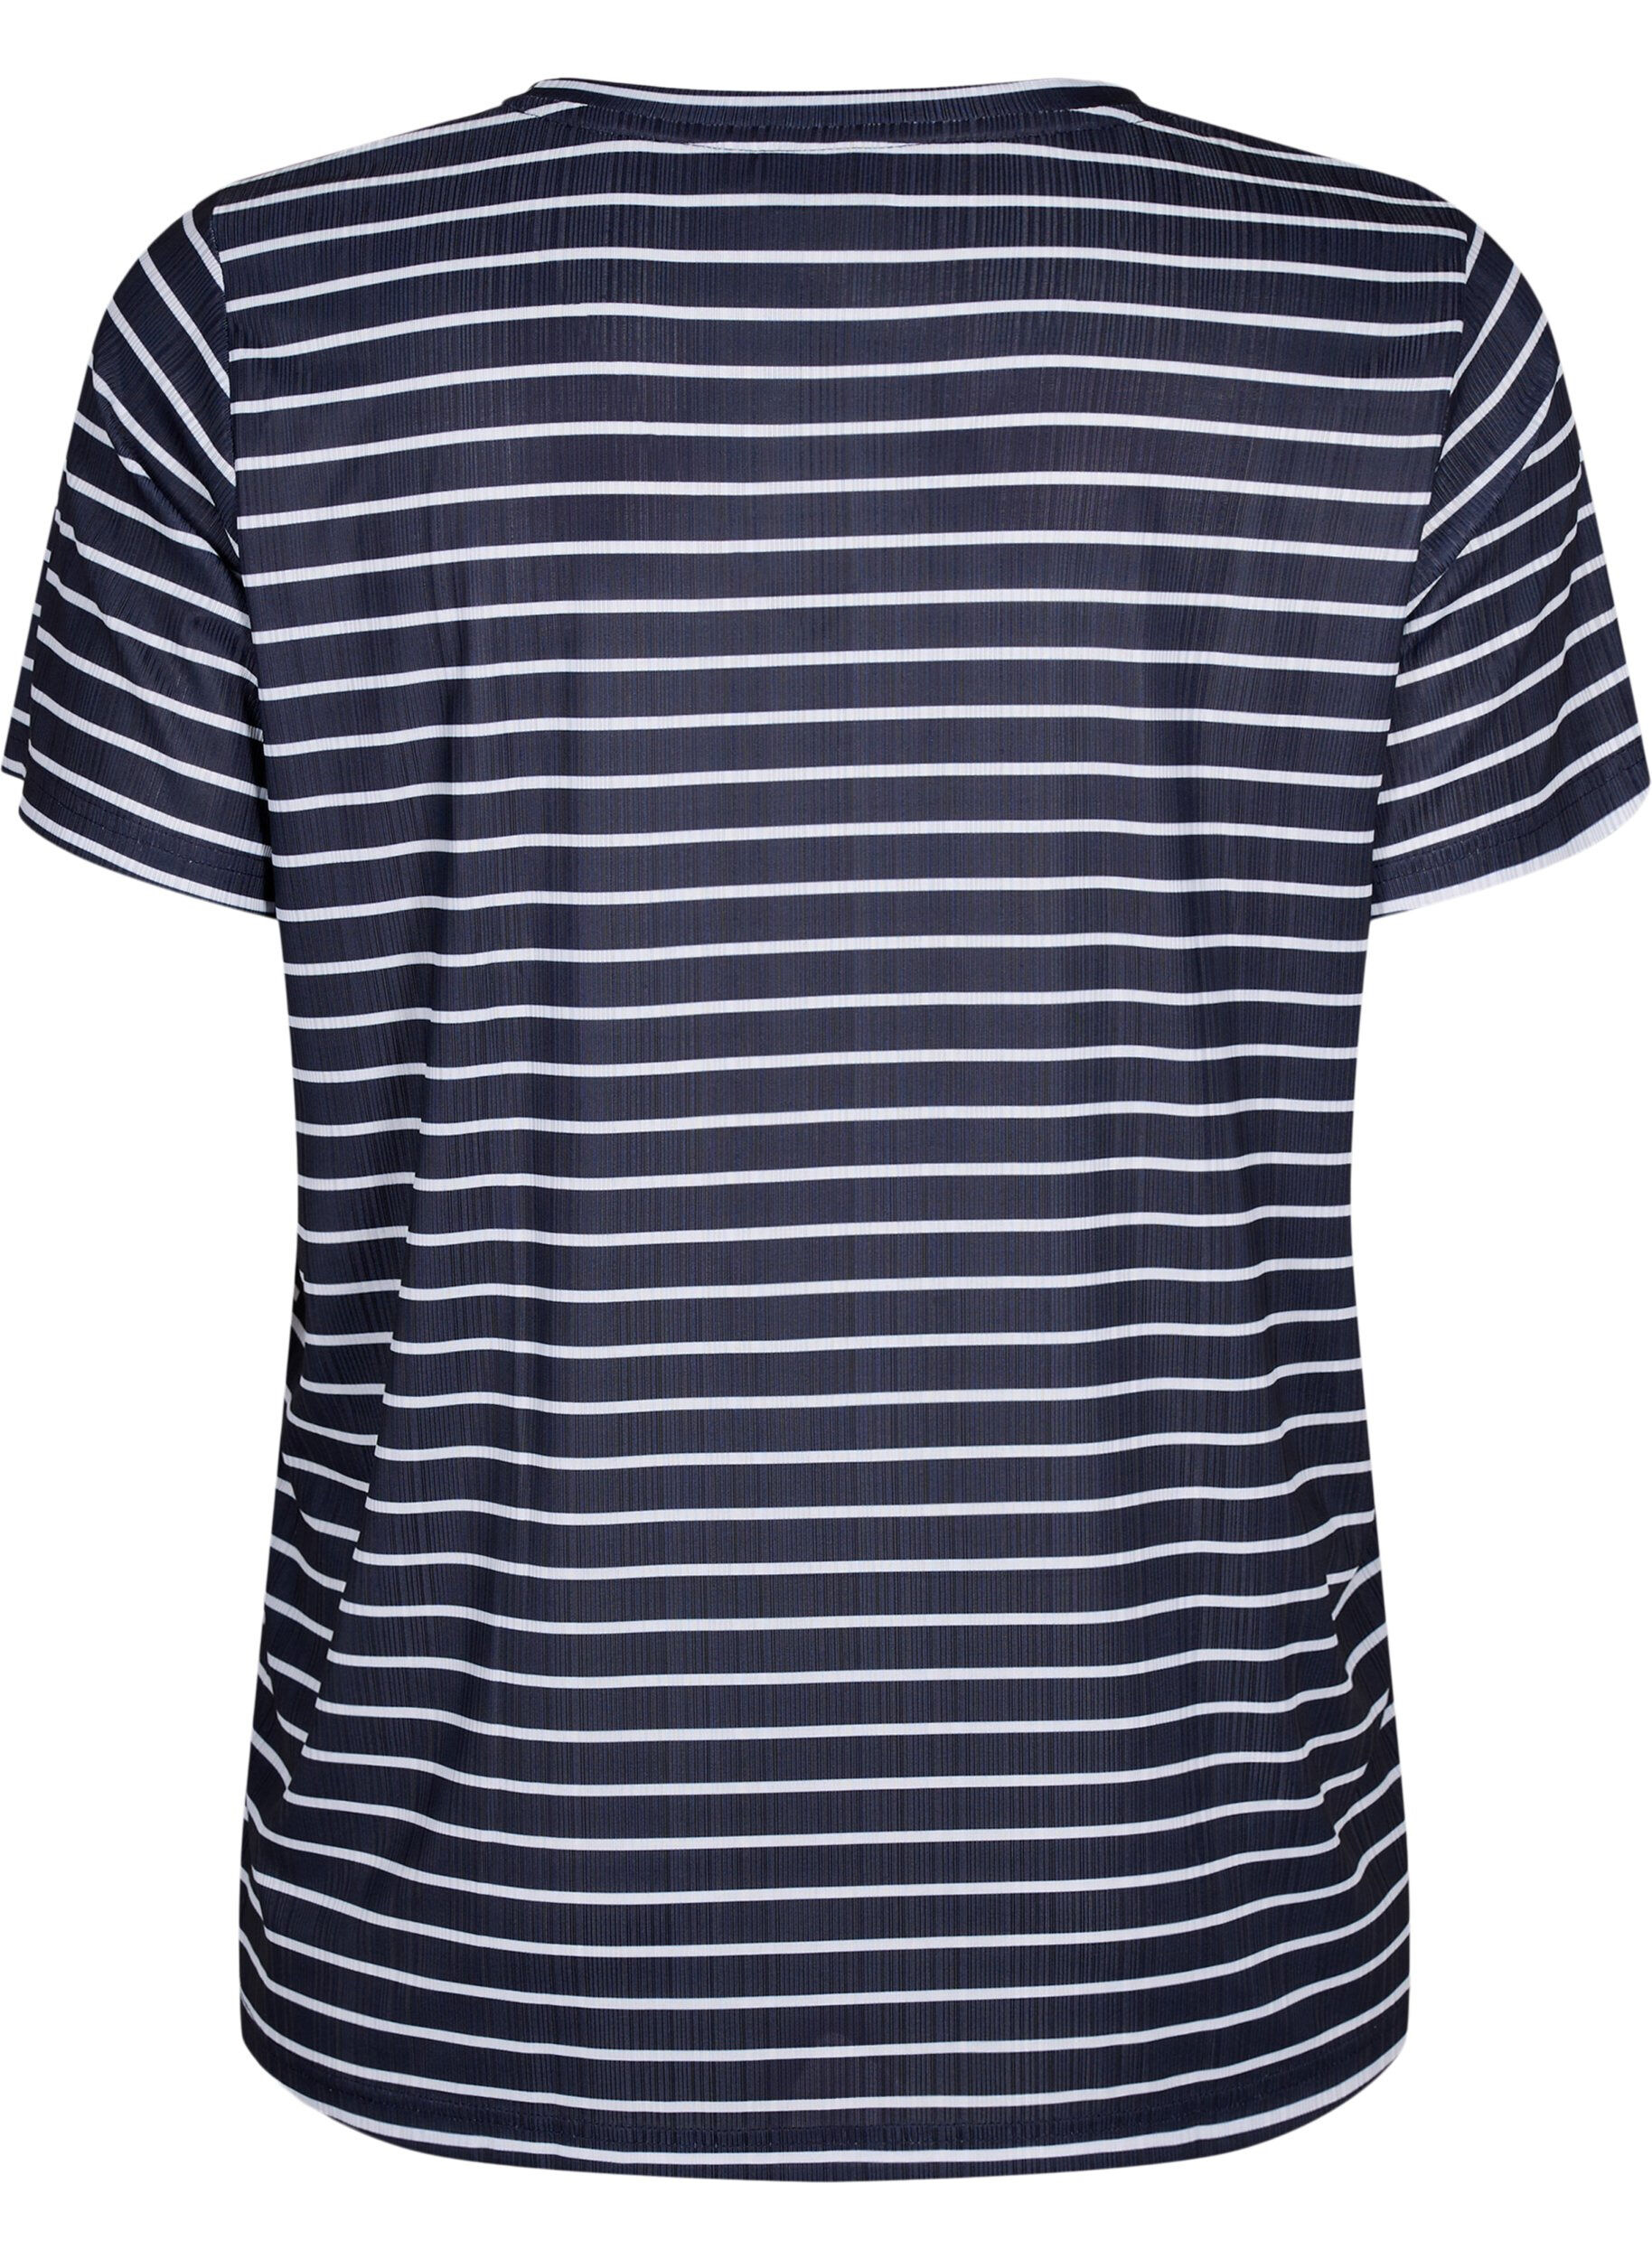 FLASH - T-shirt with stripes - Blue - Sz. S - Zizzifashion